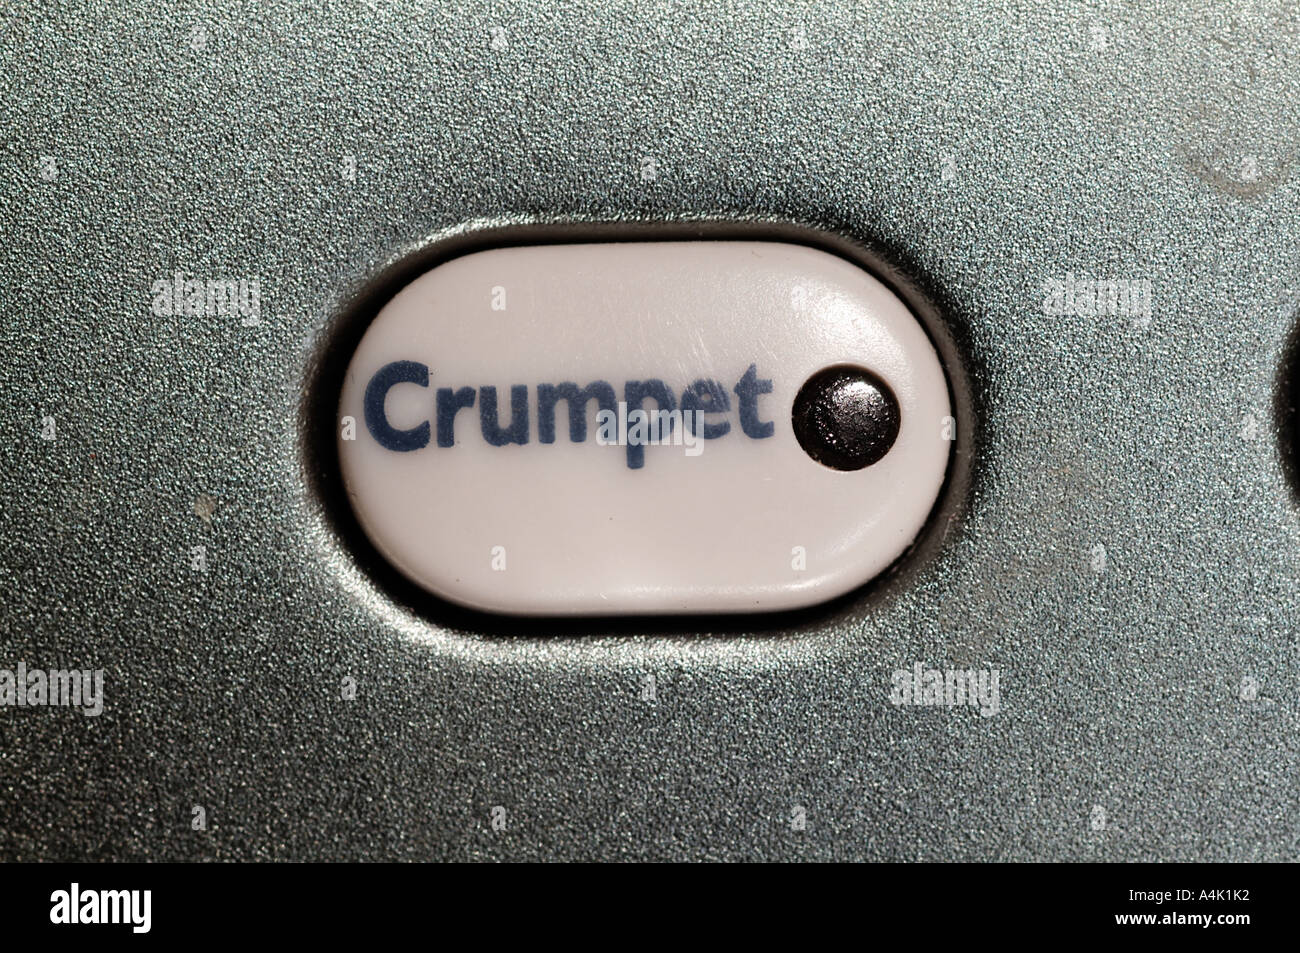 Crumpet botón en toster Foto de stock